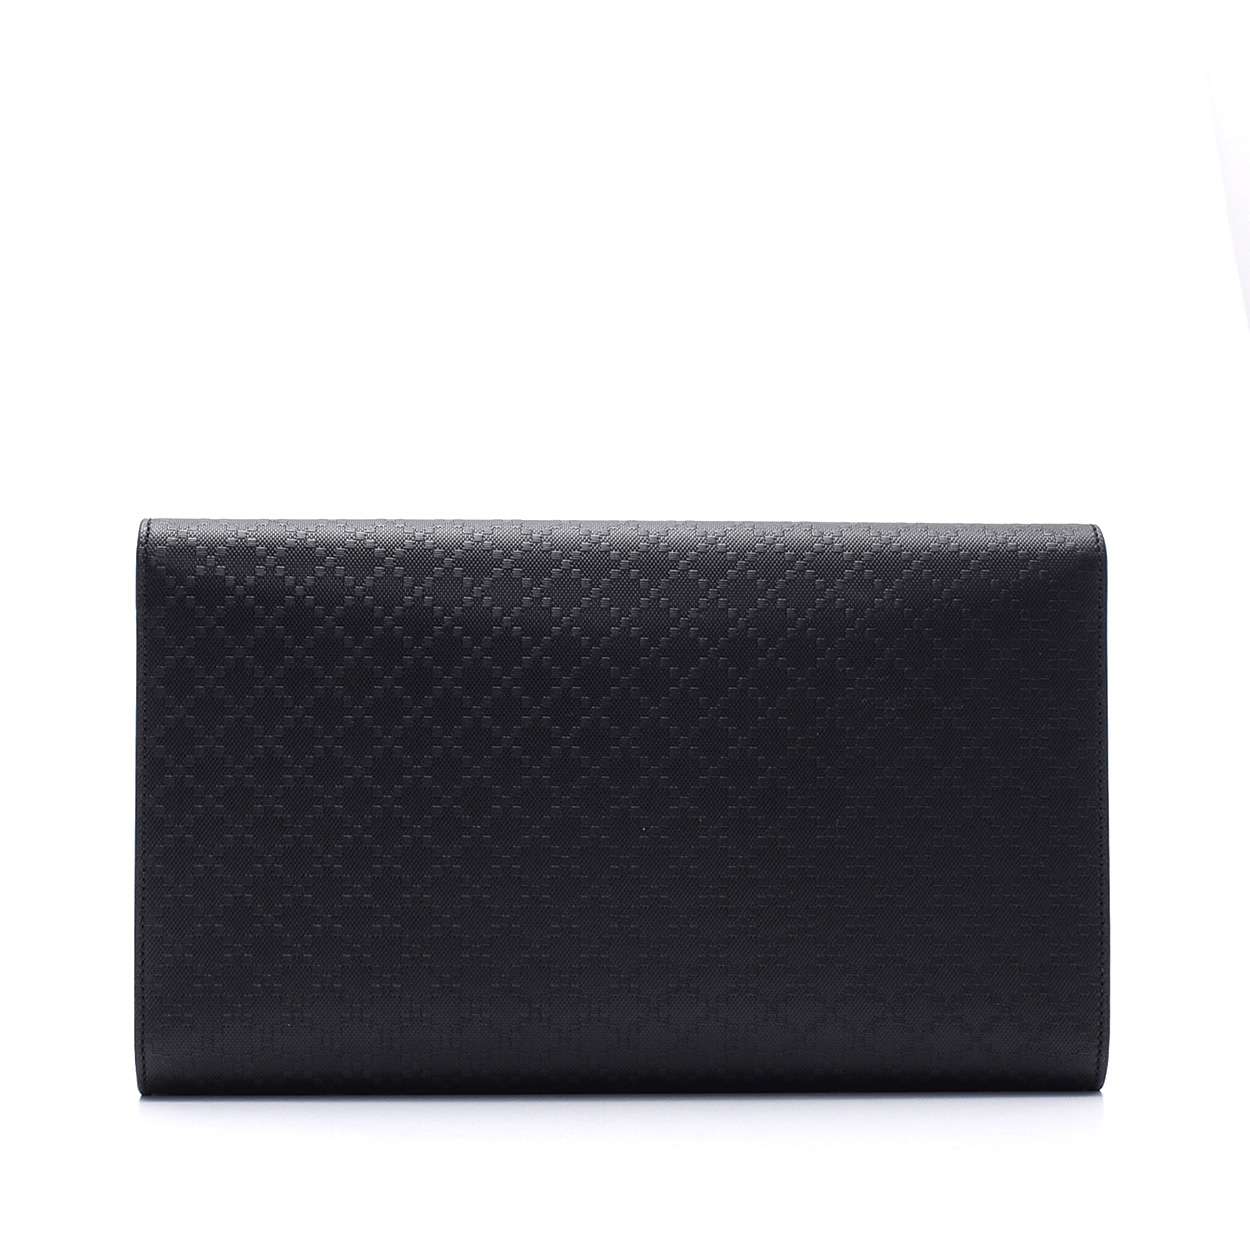 Gucci - Black Leather Long Clutch Bag